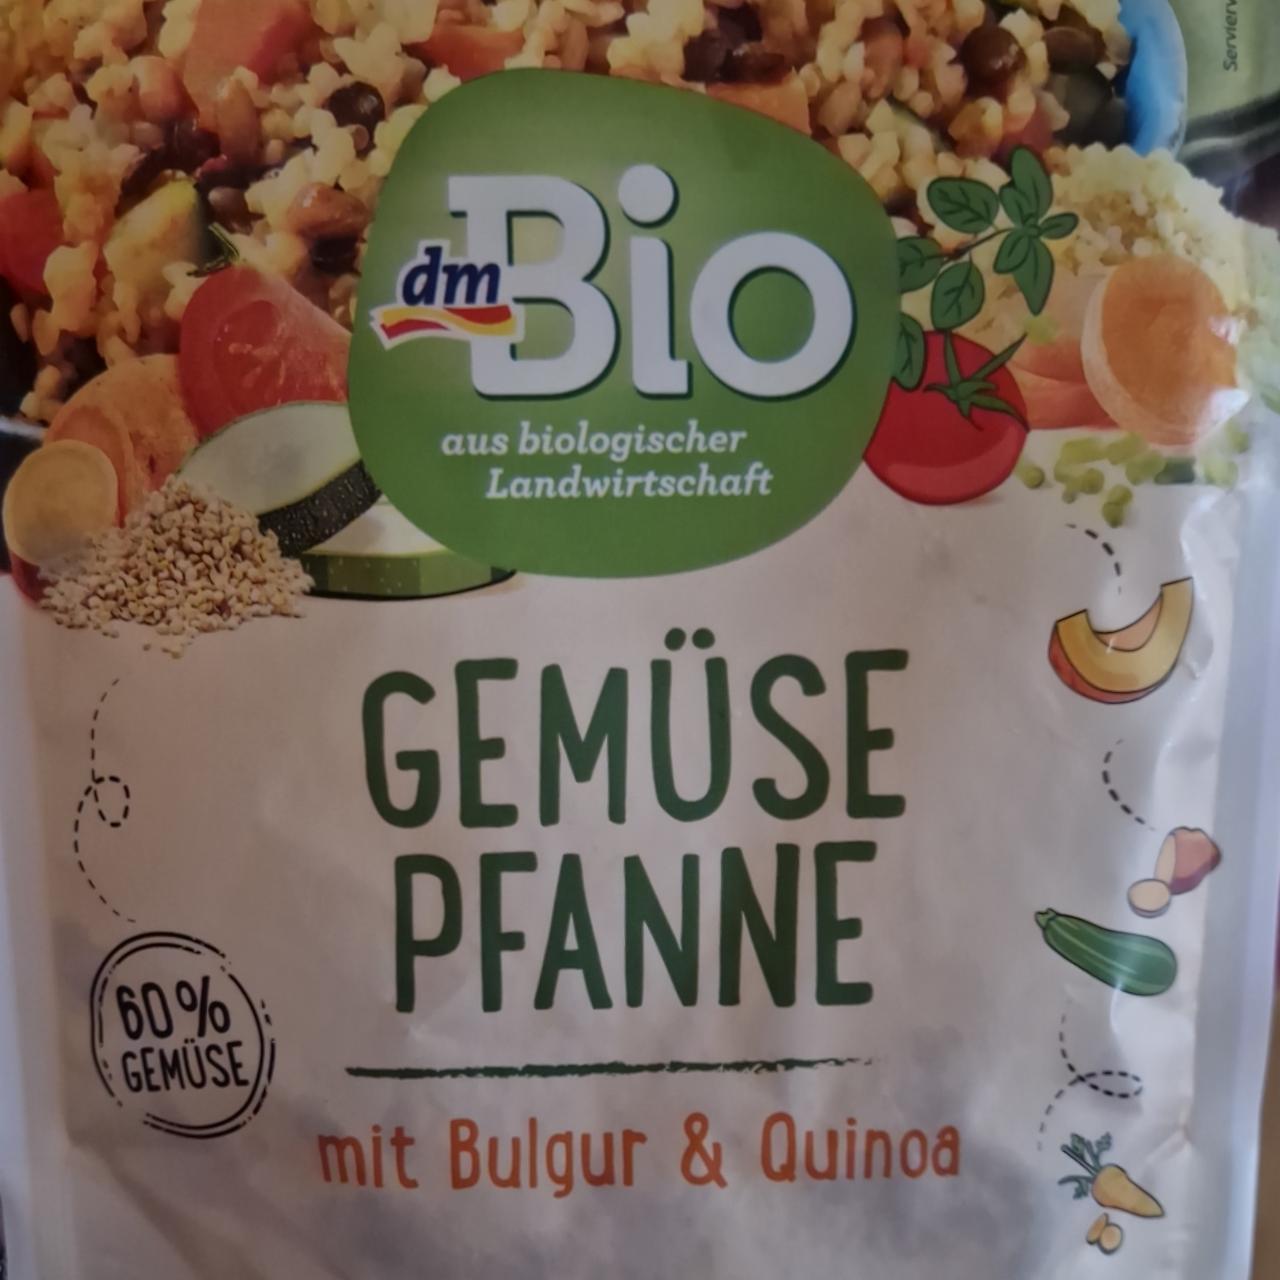 Fotografie - Gemüse pfanne mít Bulgur & Quinoa dmBio